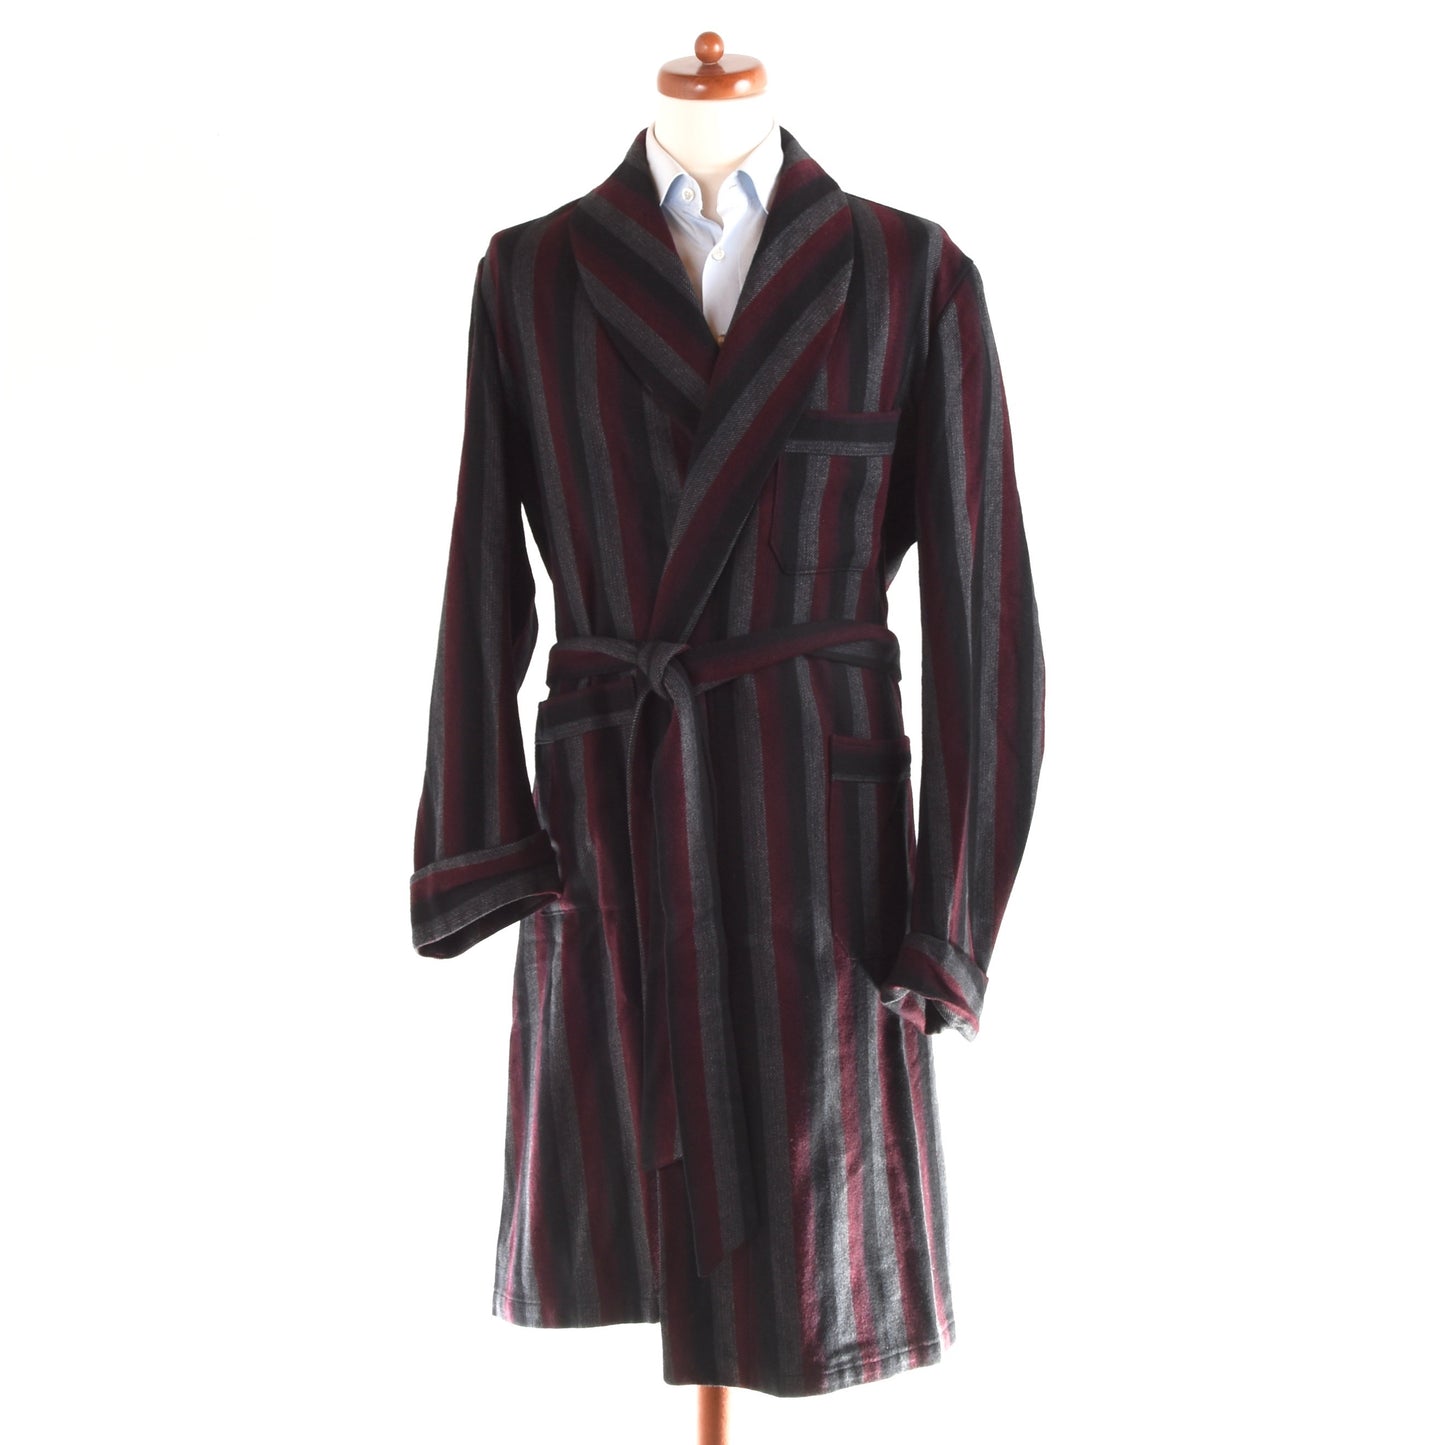 Vintage Shawl Collar Wool Robe - Striped